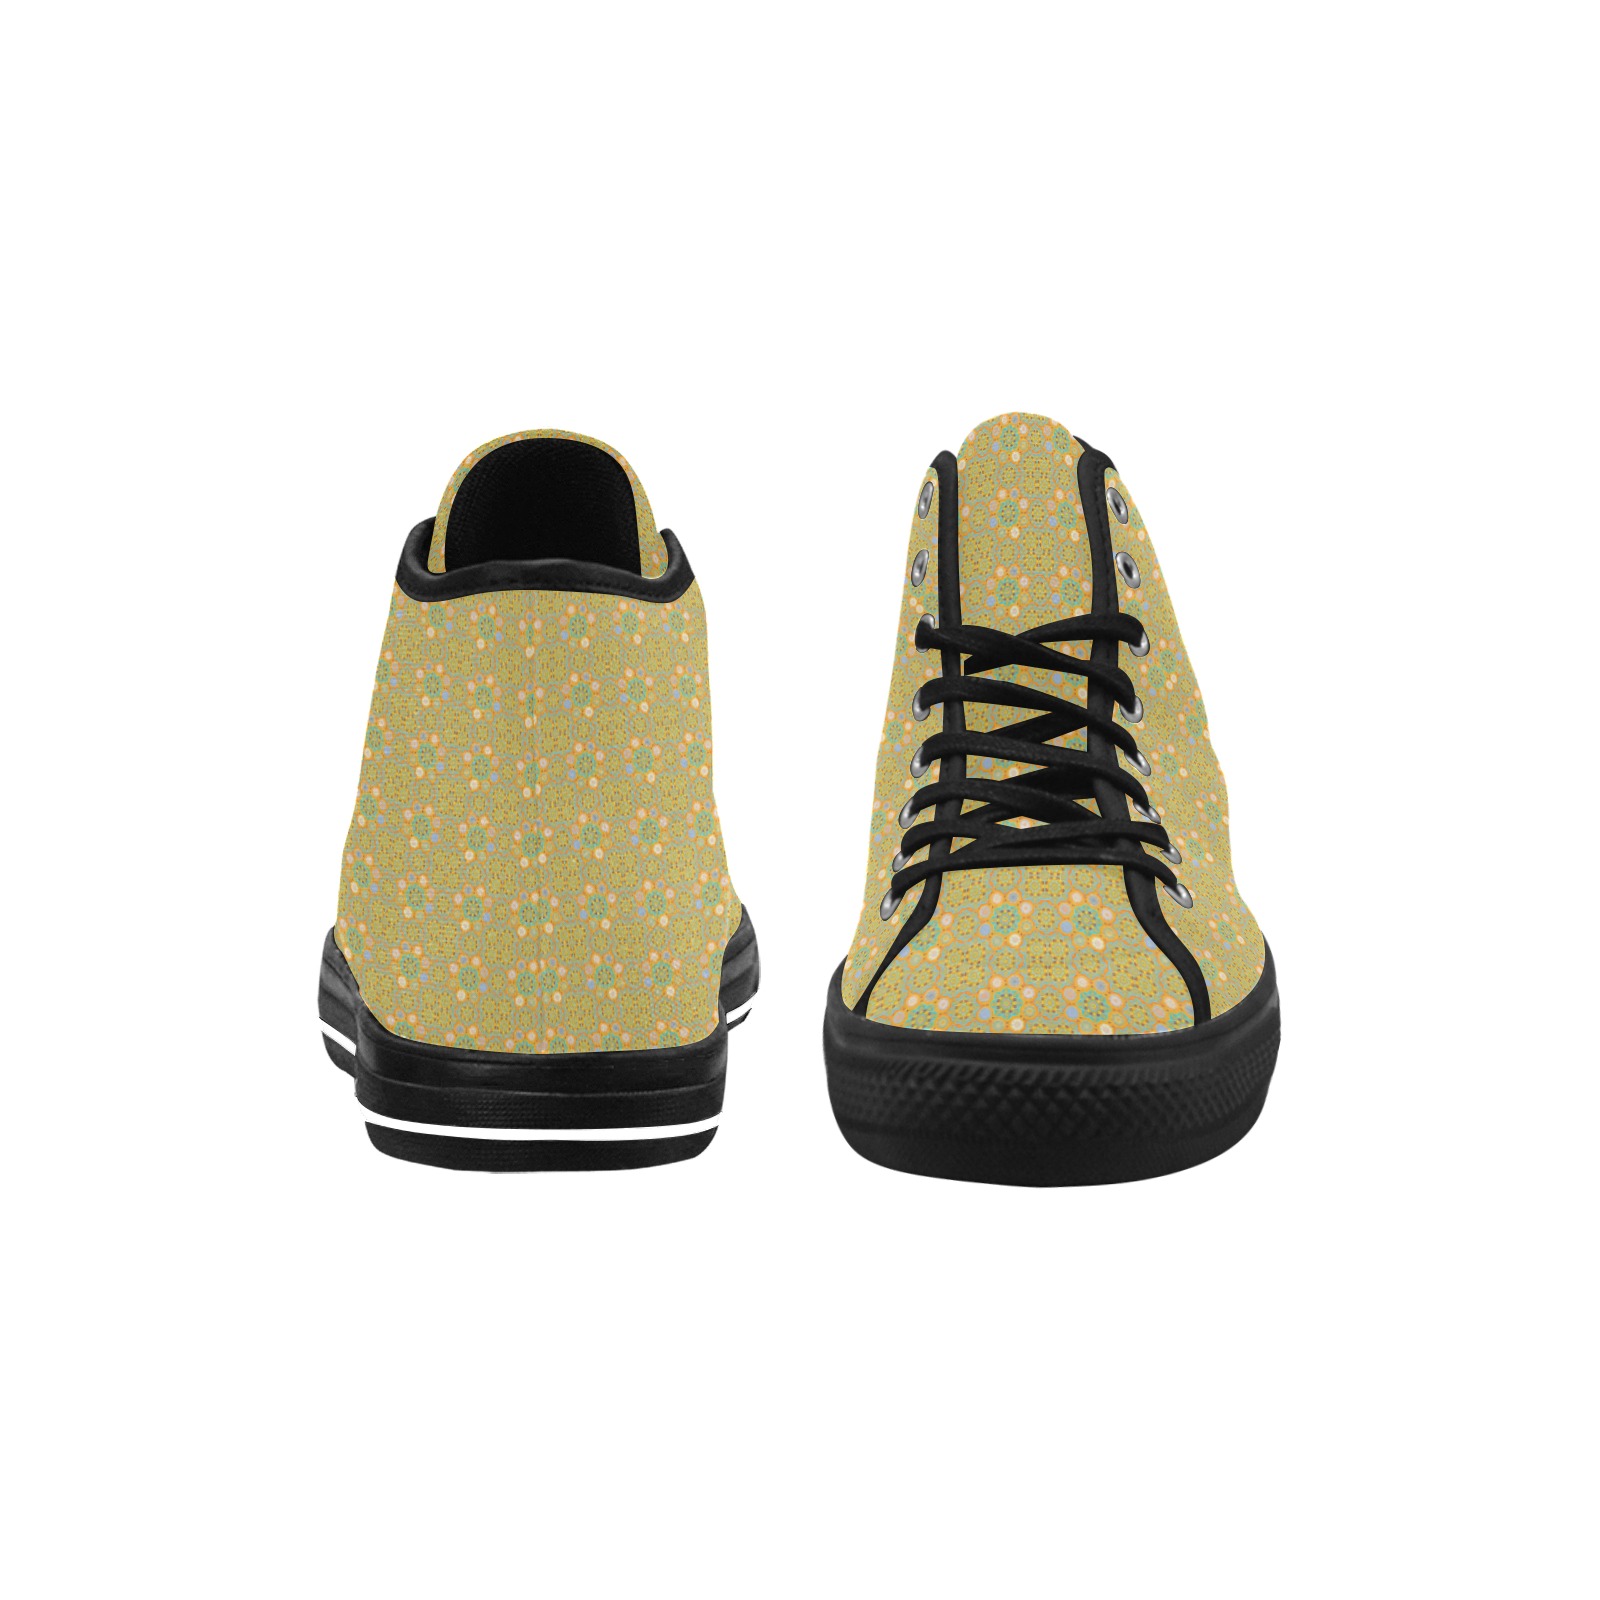 Octo brightener arabesque Moorish tangerine style pattern Vancouver H Men's Canvas Shoes (1013-1)